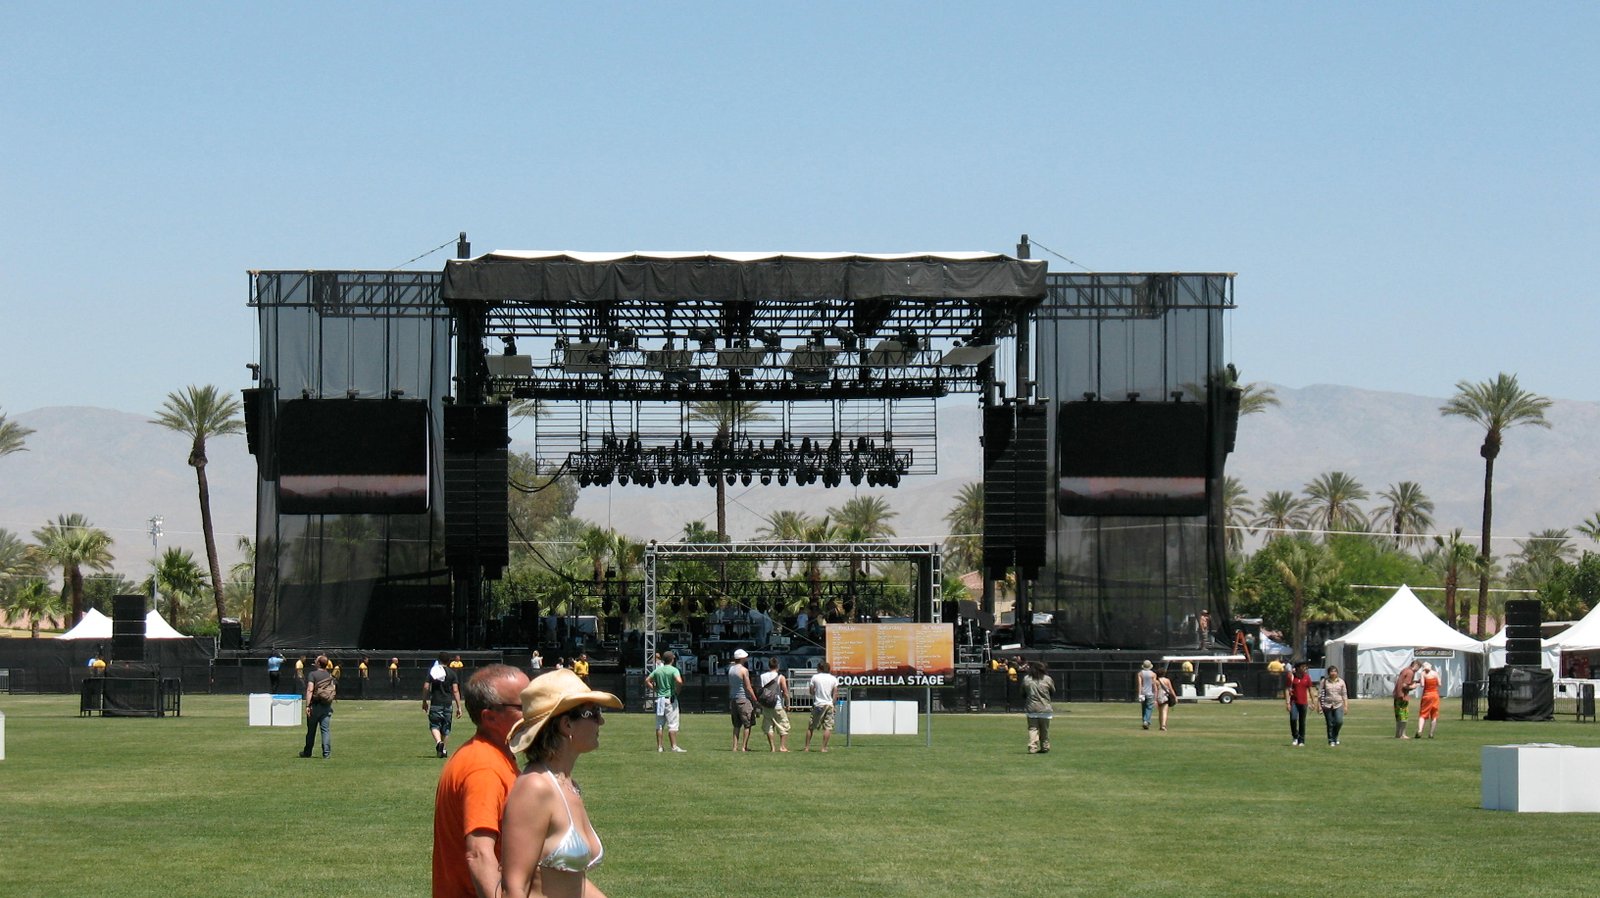 COVID-19: Music festival Coachella postponed amid outbreak fears